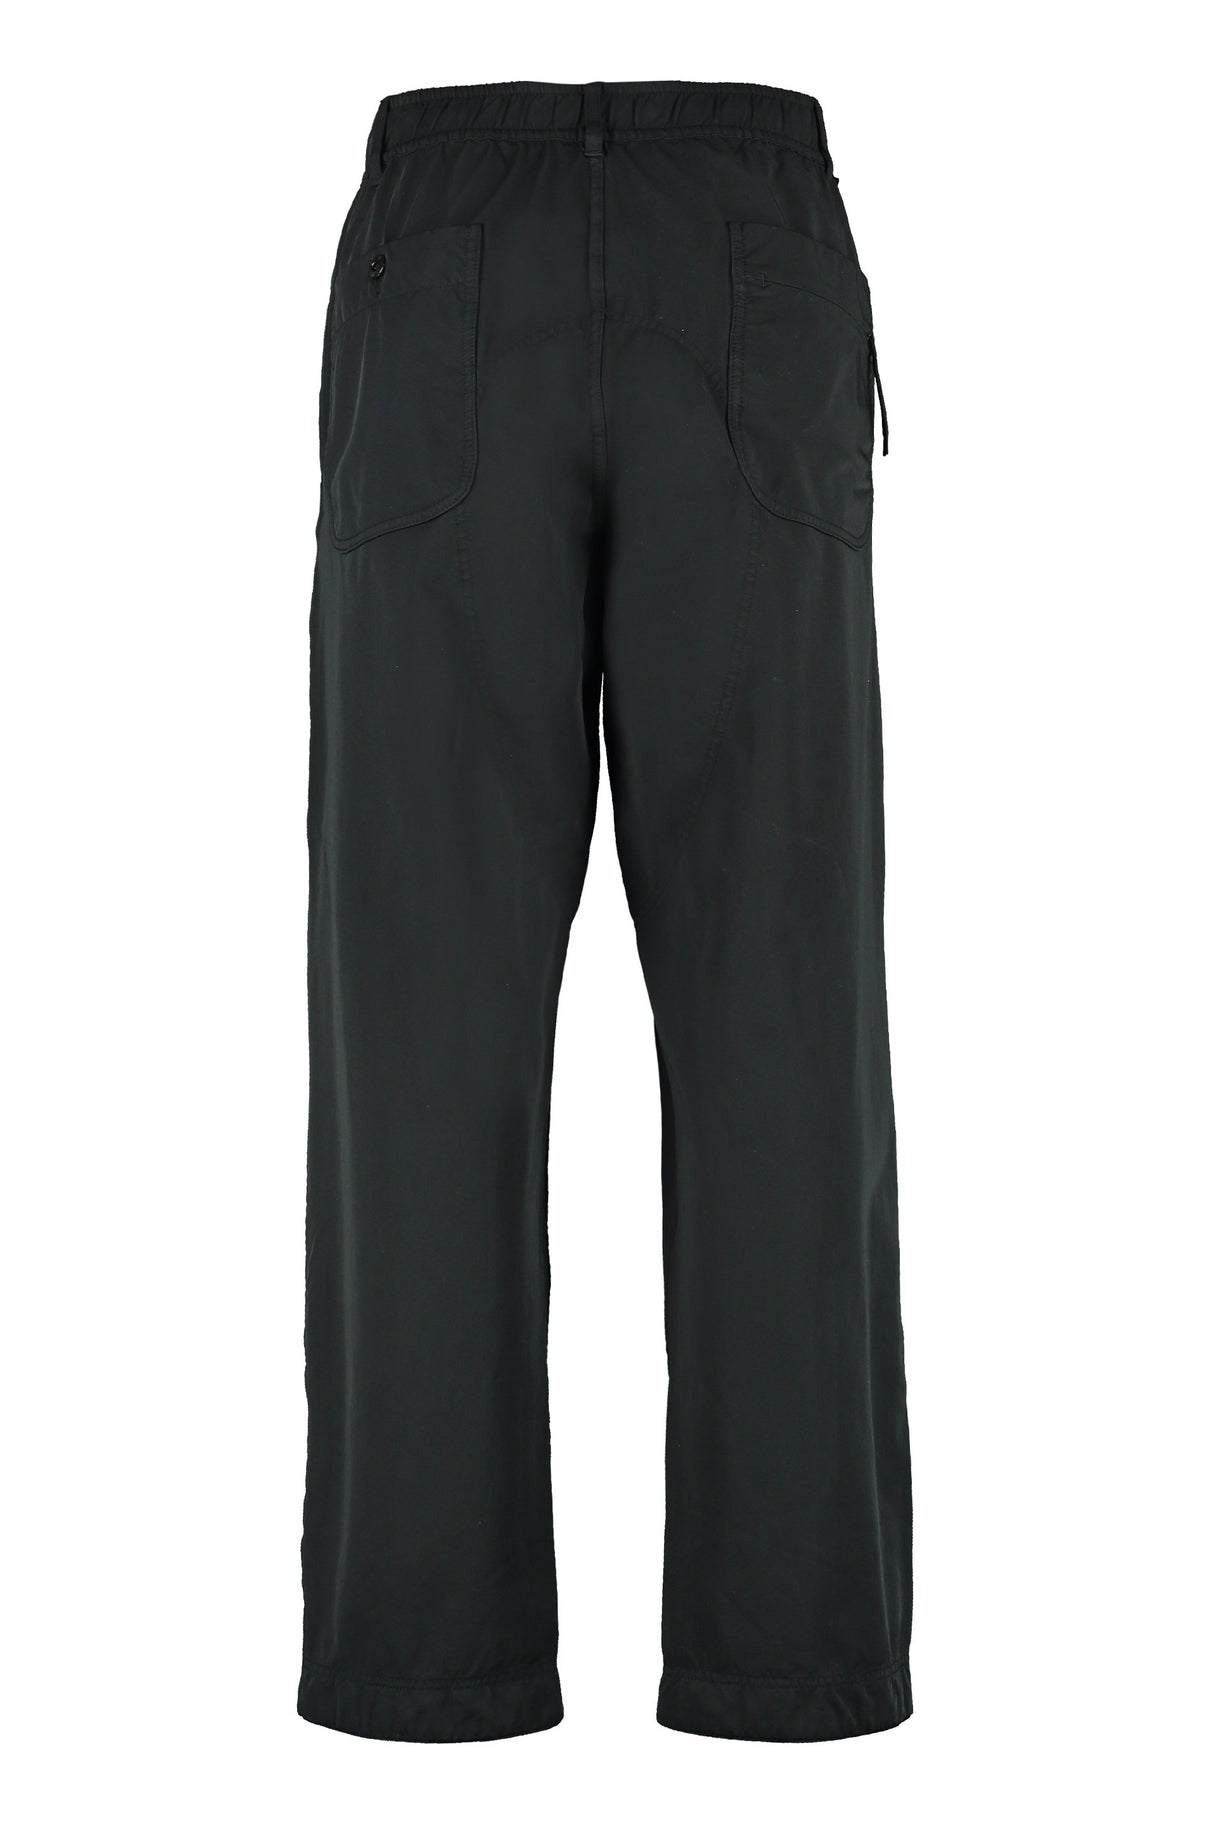 STONE ISLAND Black Technical Fabric Pants for Men